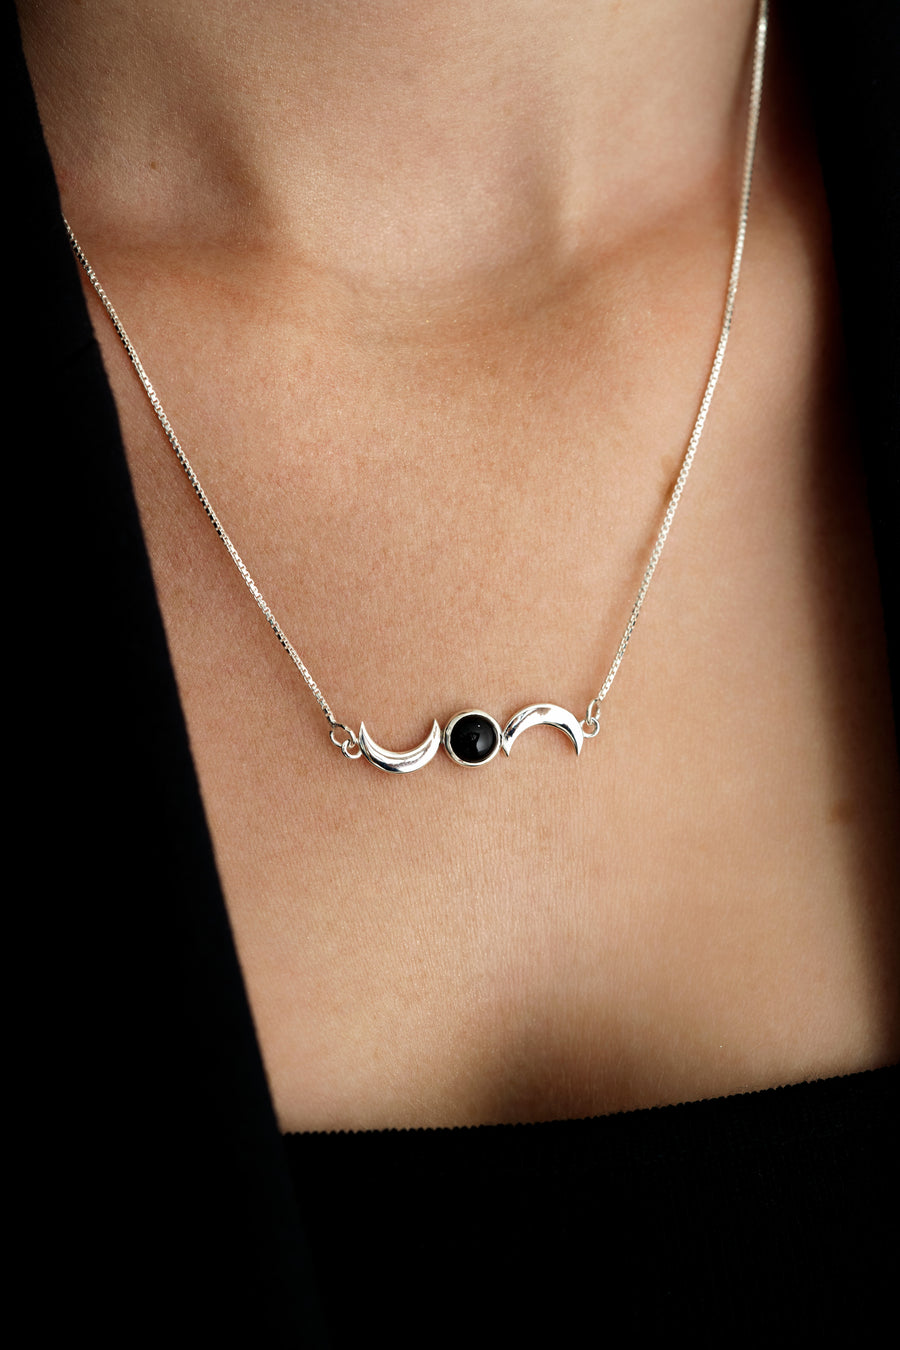 Black onyx double moon necklace